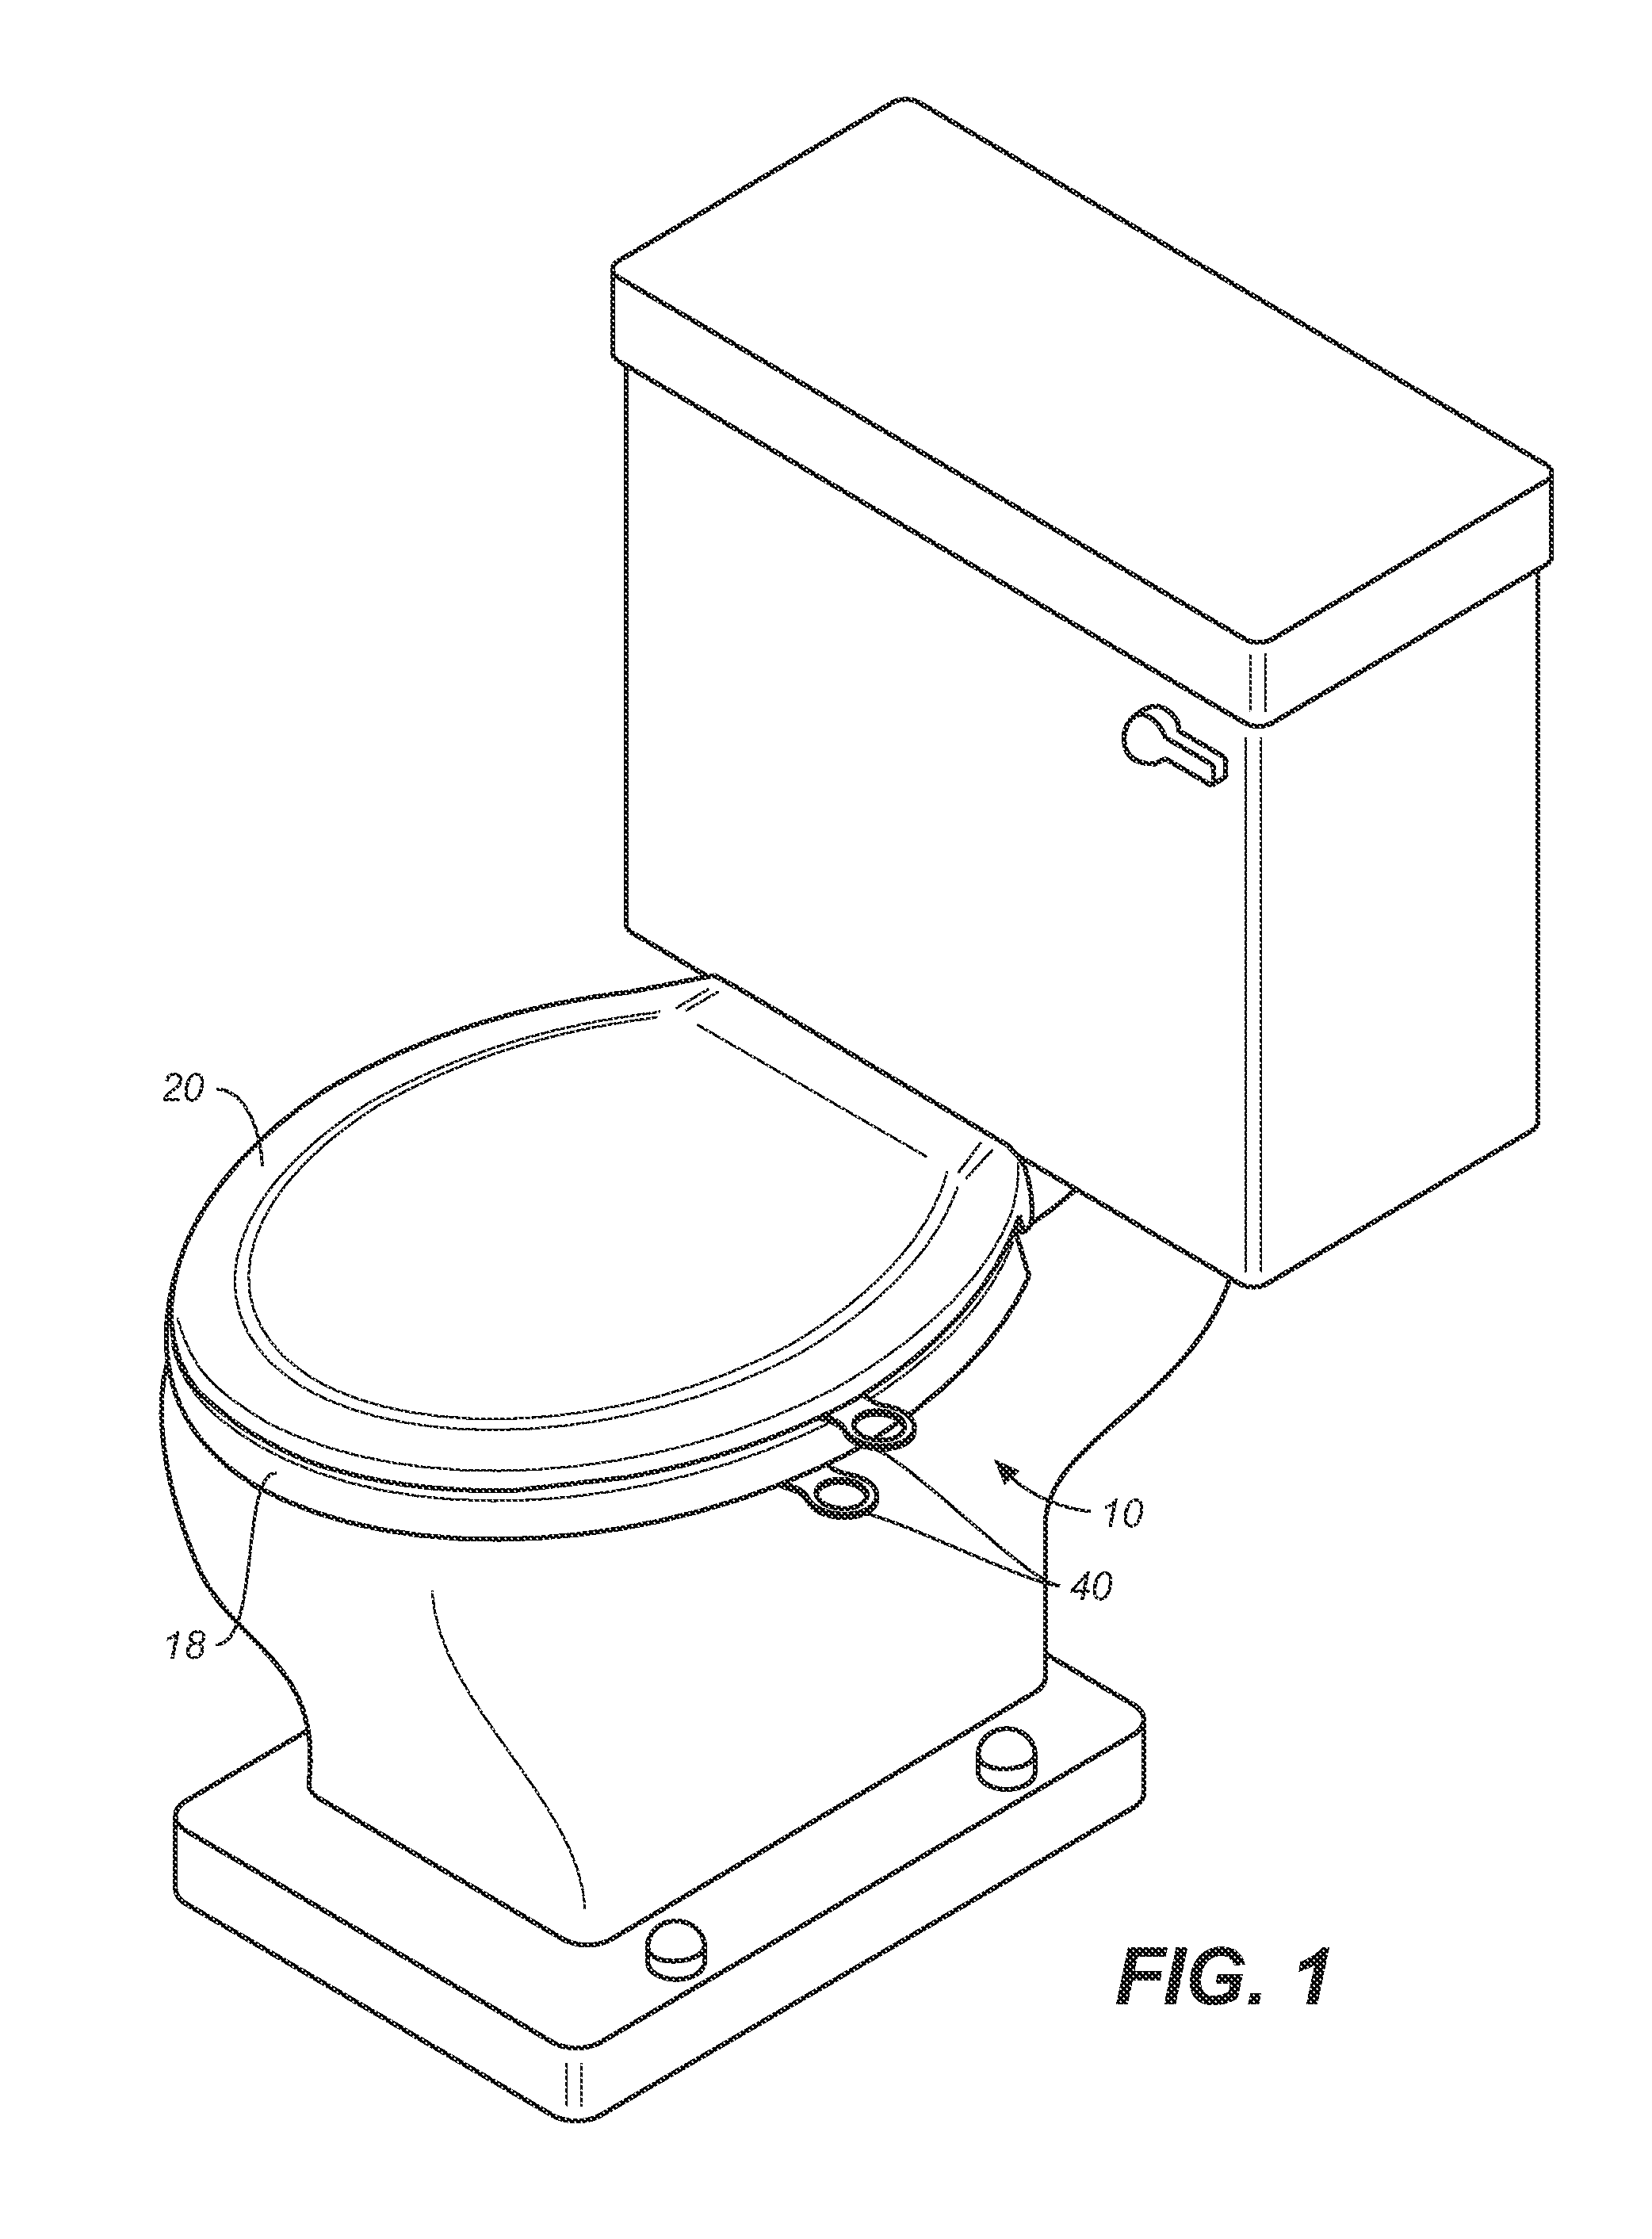 Disposable toilet seat lift apparatus